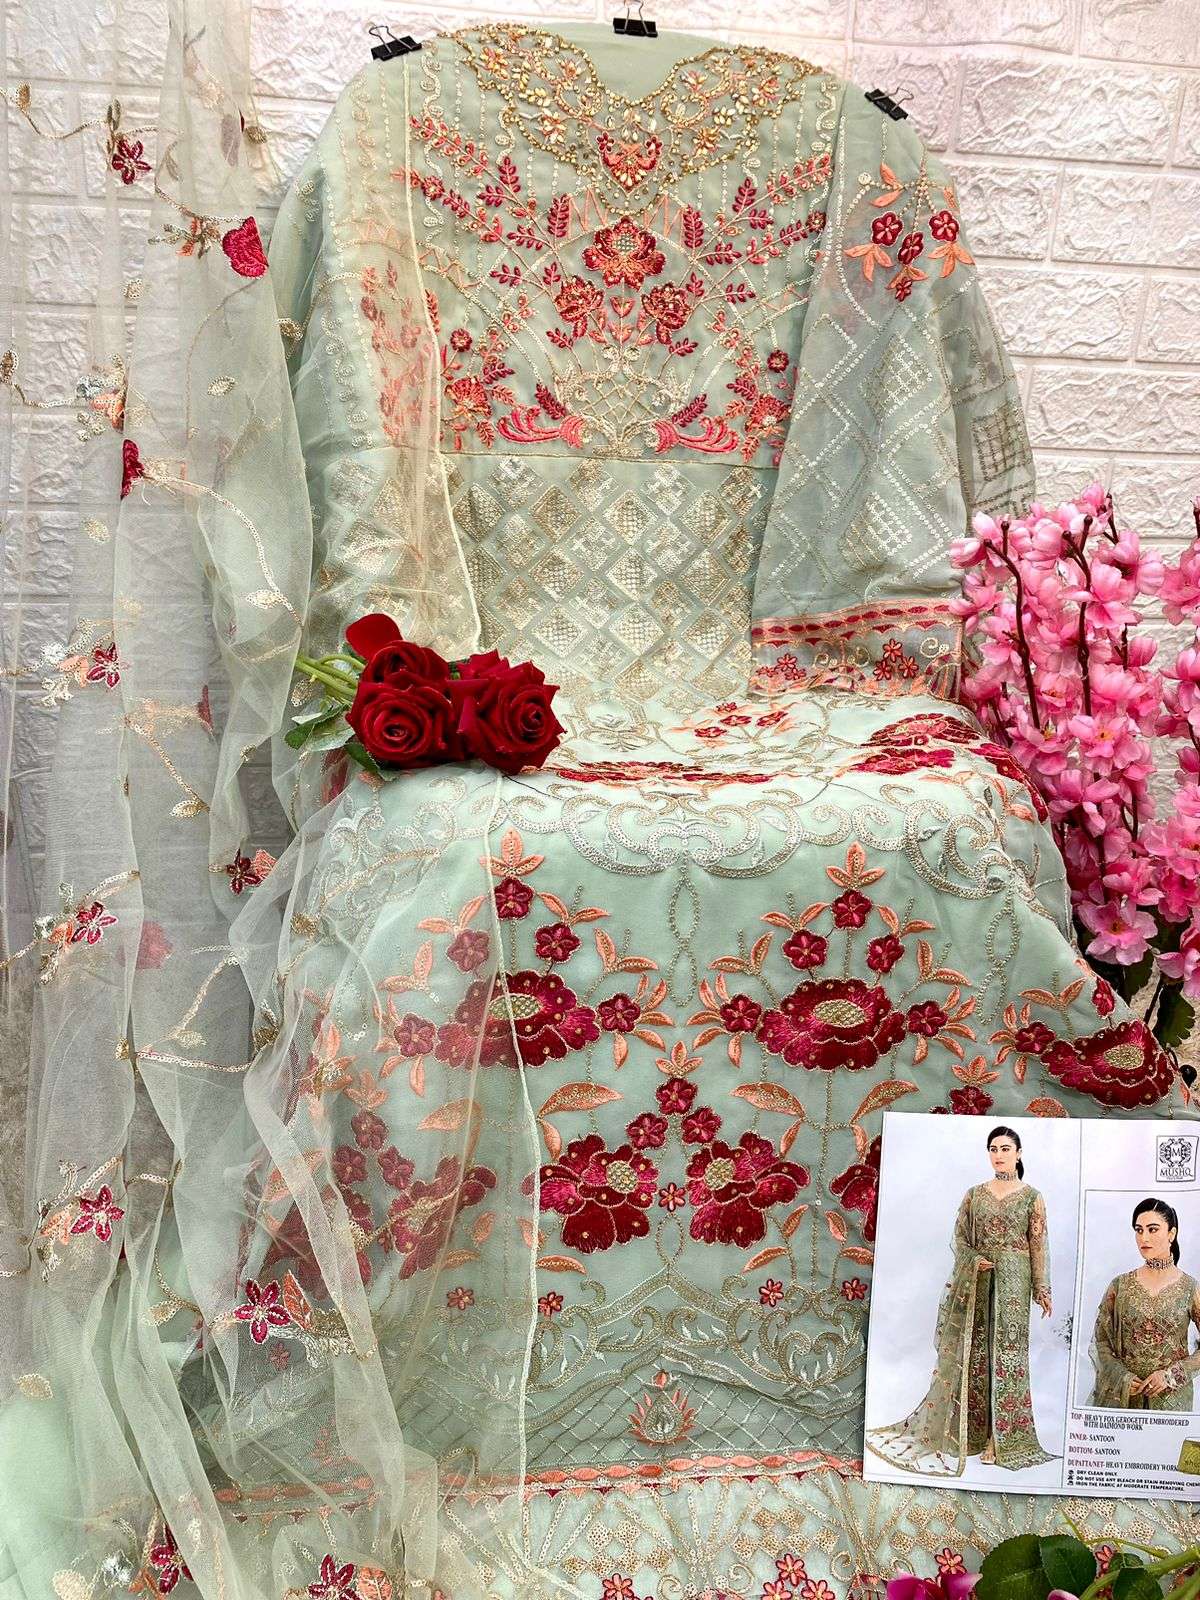 msuhq 245 series stylish designer pakistani salwar suits online dealer surat